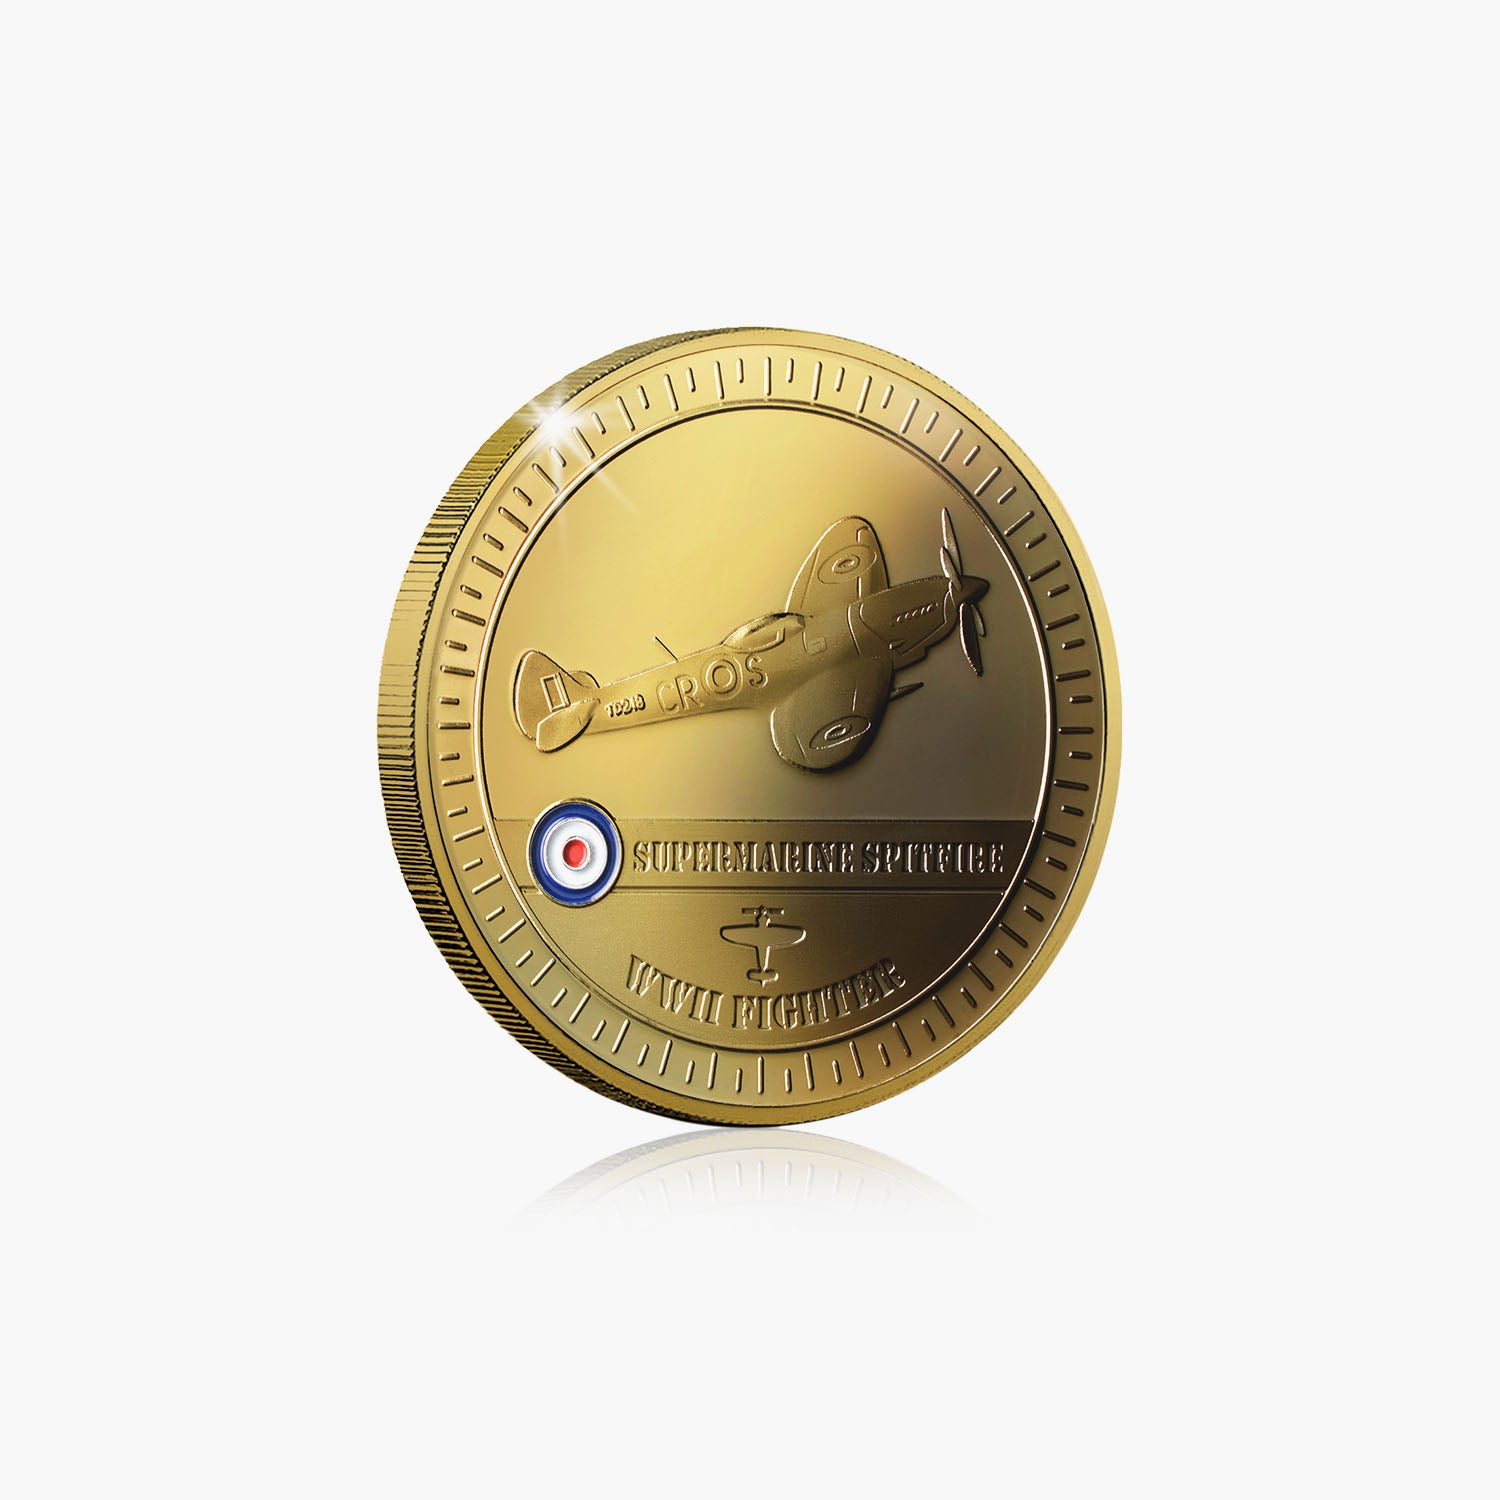 Supermarine Spitfire Gold-Plated Commemorative